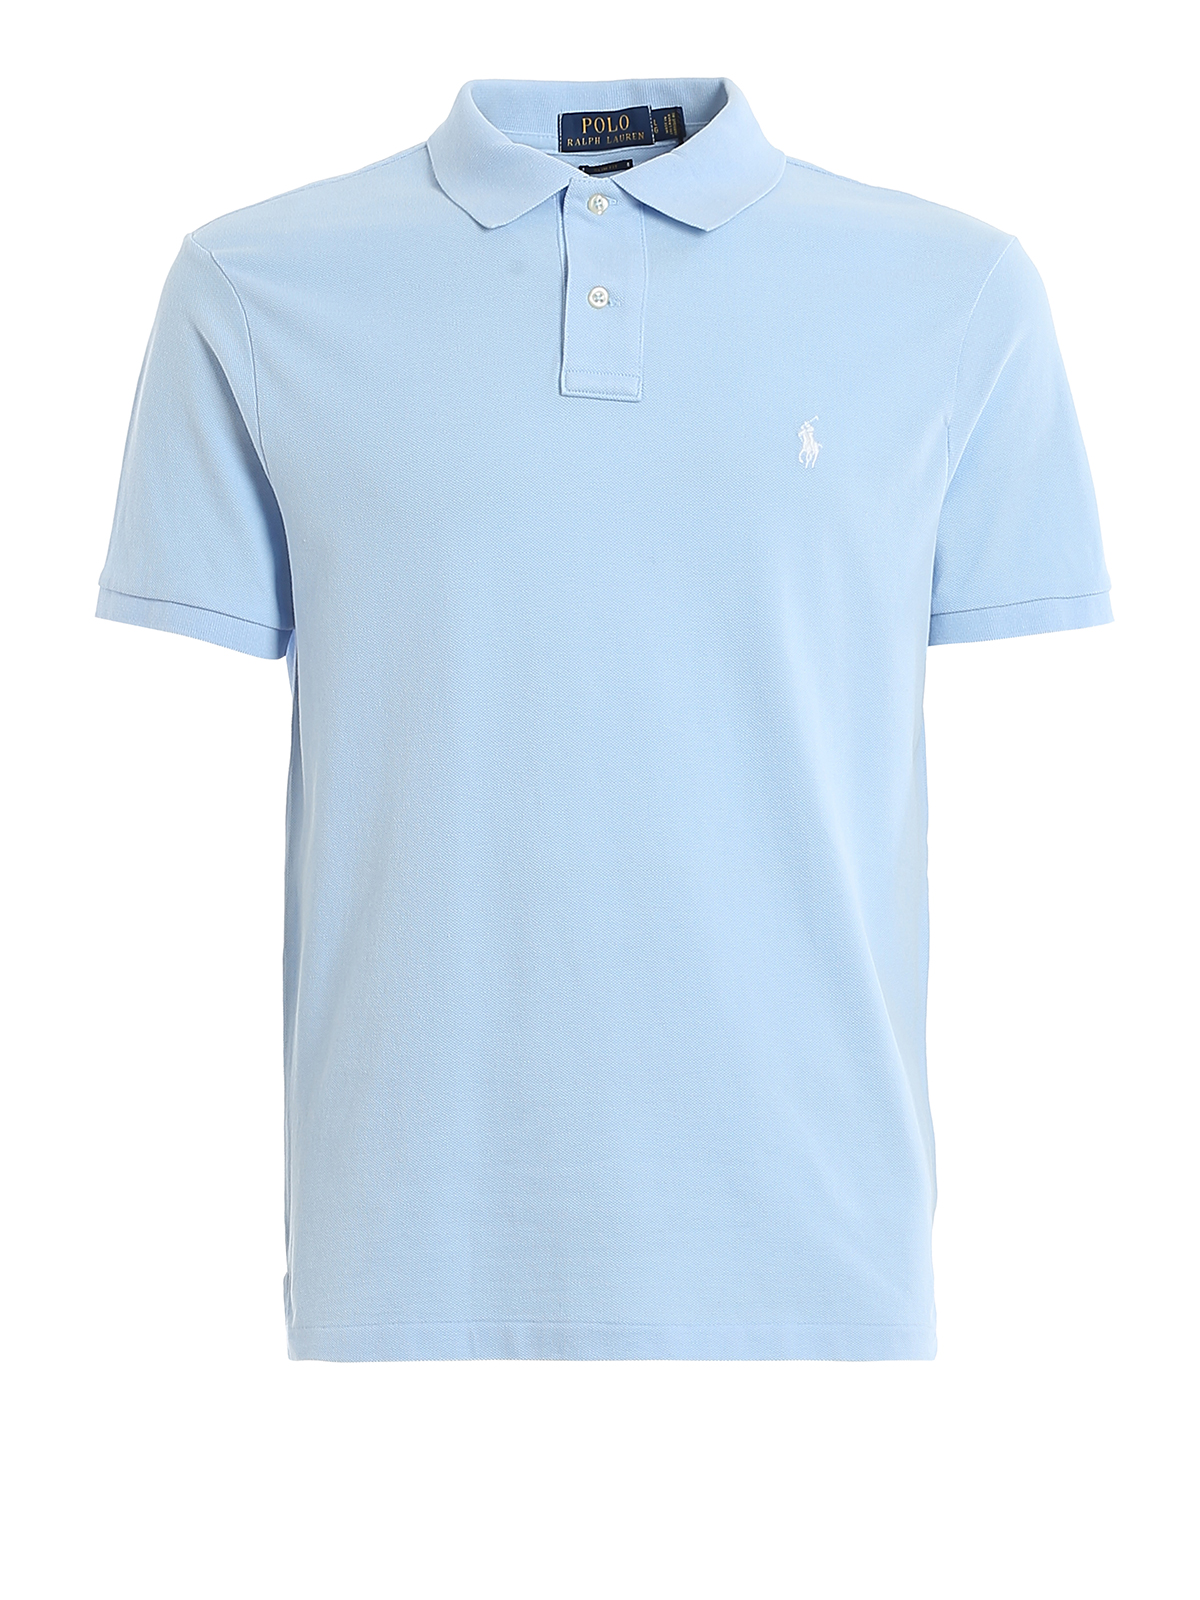 Polo Ralph Lauren Polo shirt - lafayette blue/blue 